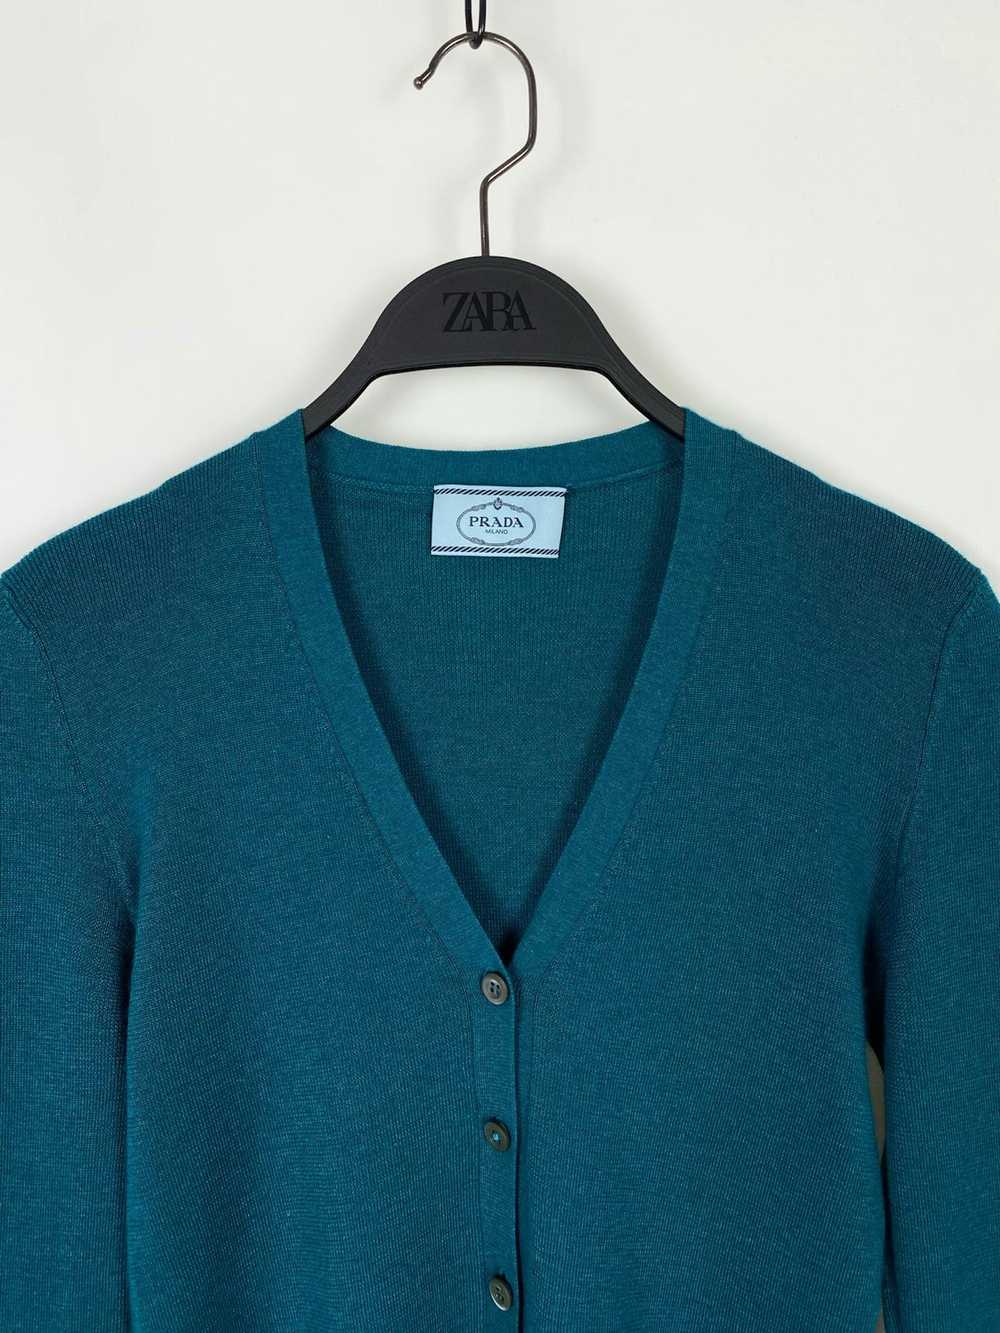 Luxury × Prada Prada Milano Wool Cardigan Sweater - image 3